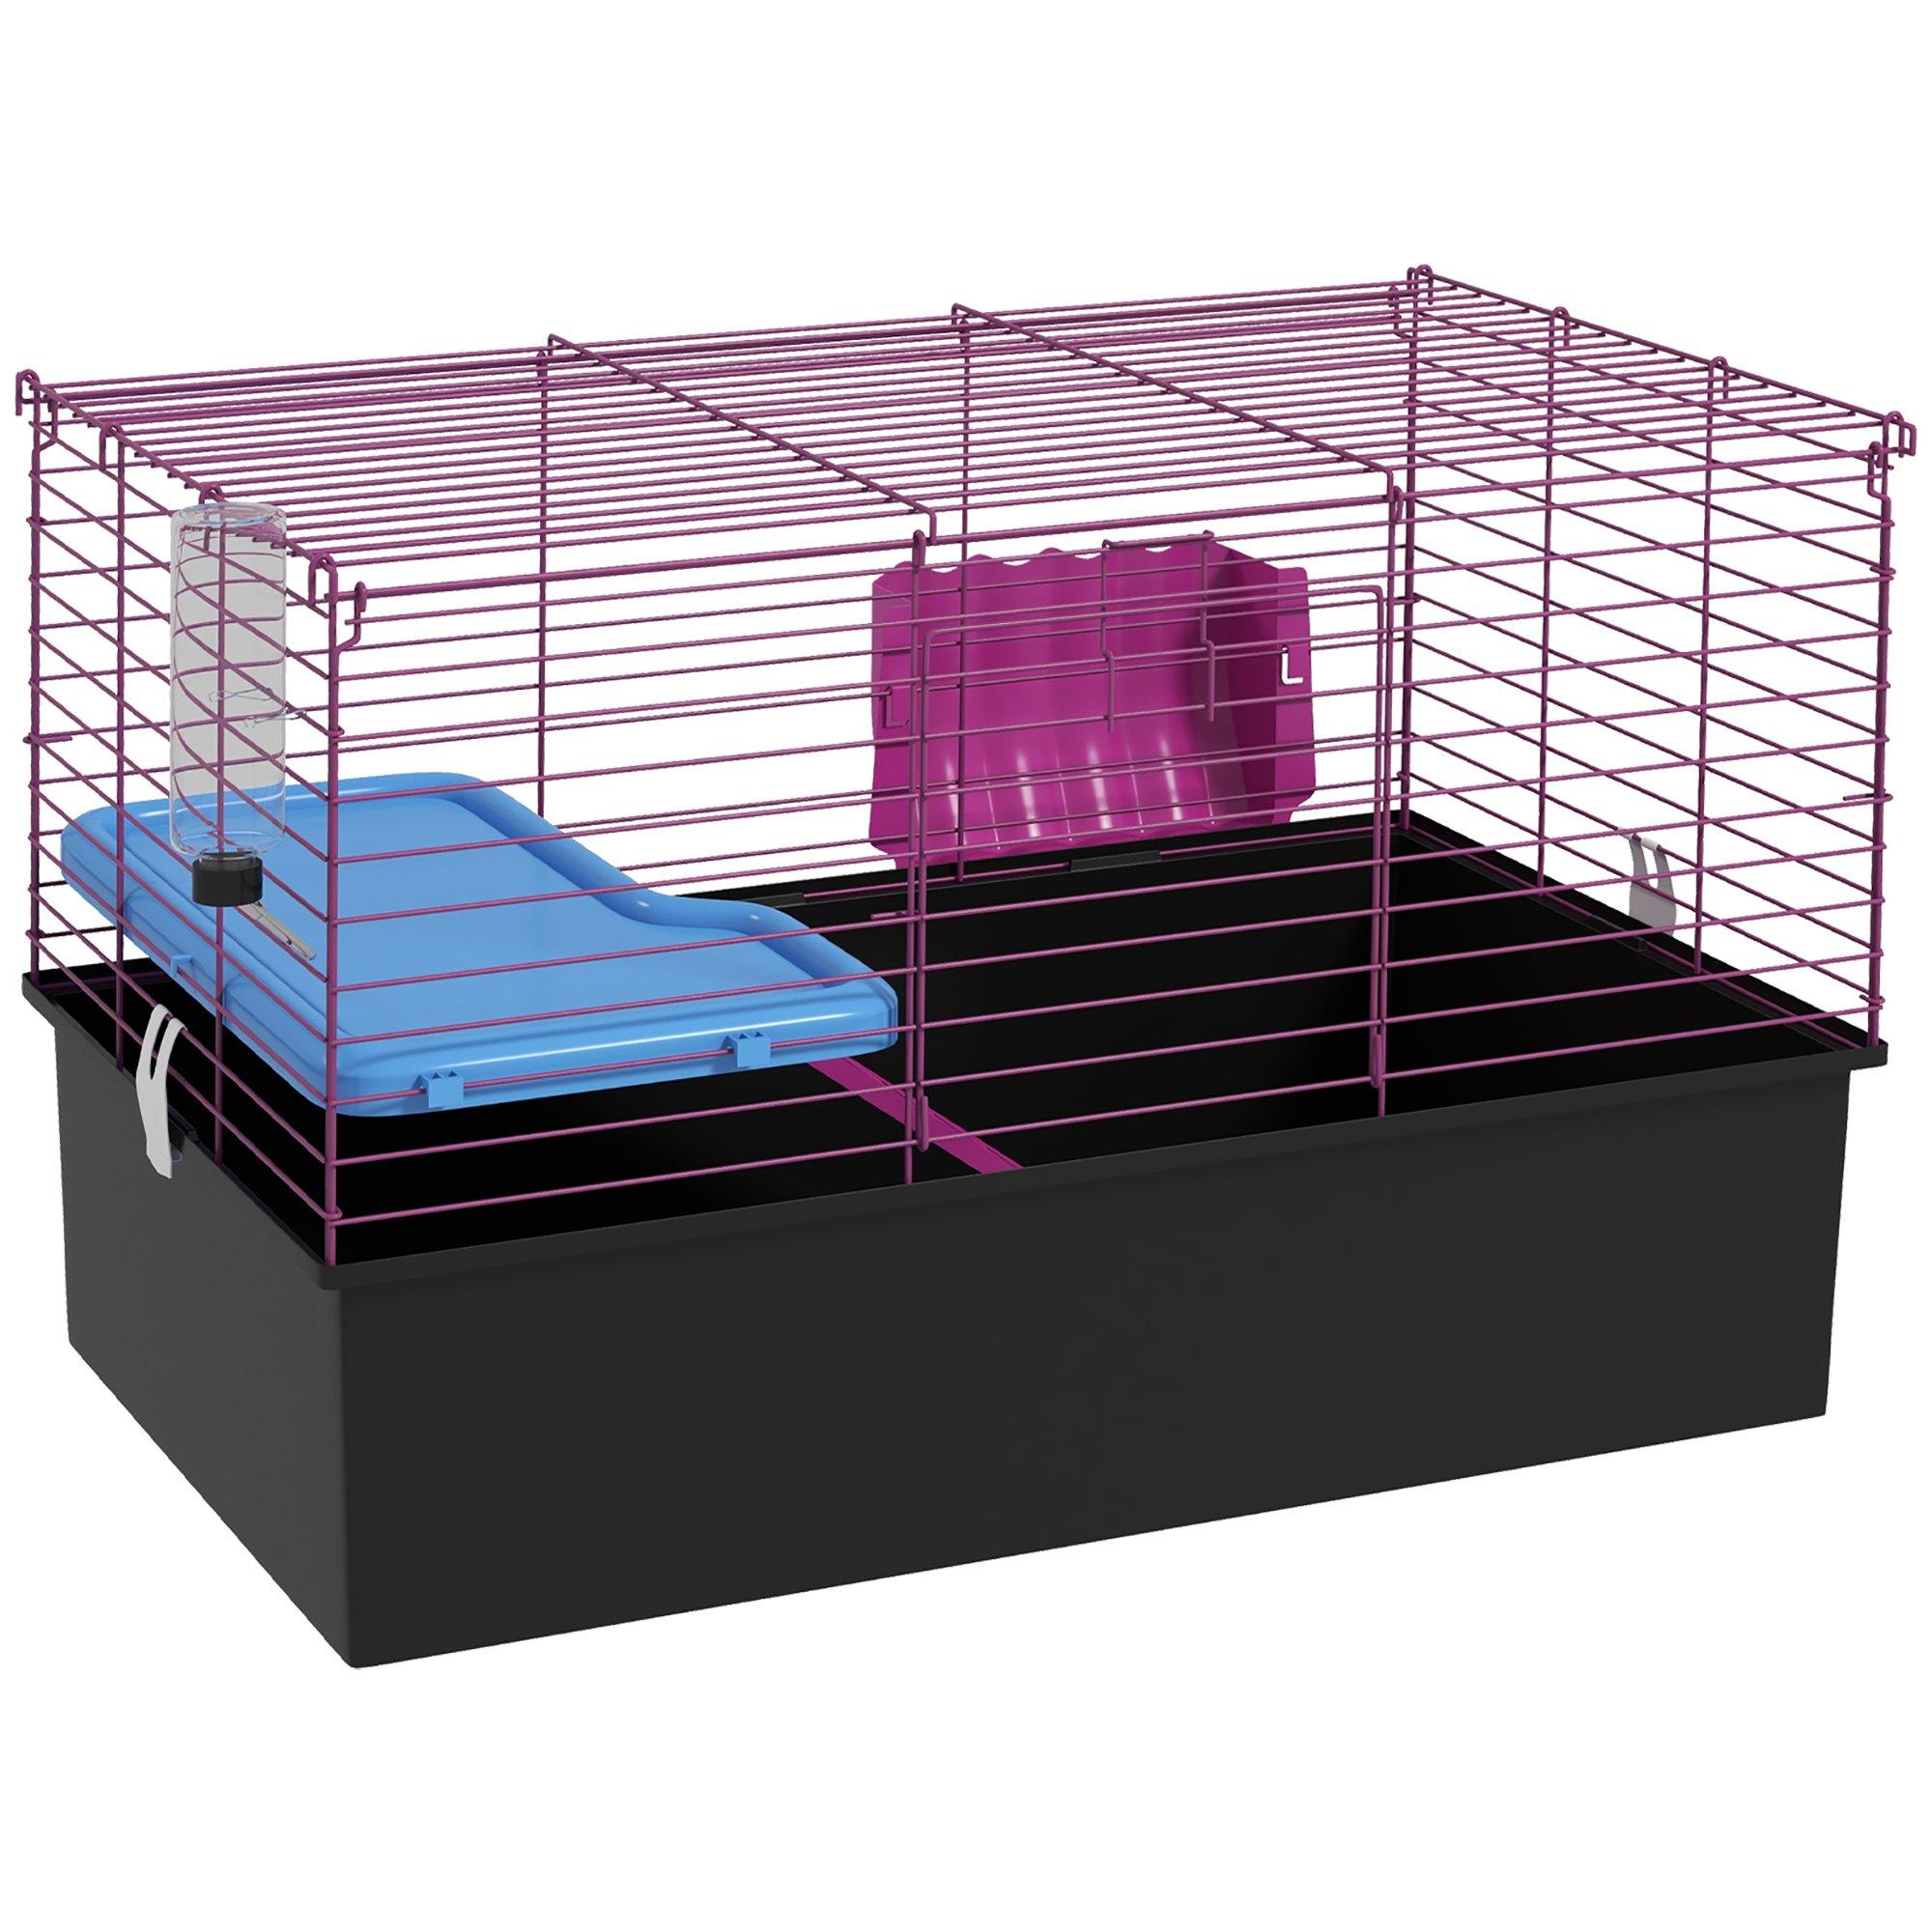 Small Animal Cage, Rabbit Hutch, Guinea Pig Pet Playhouse with Platform, Ramp